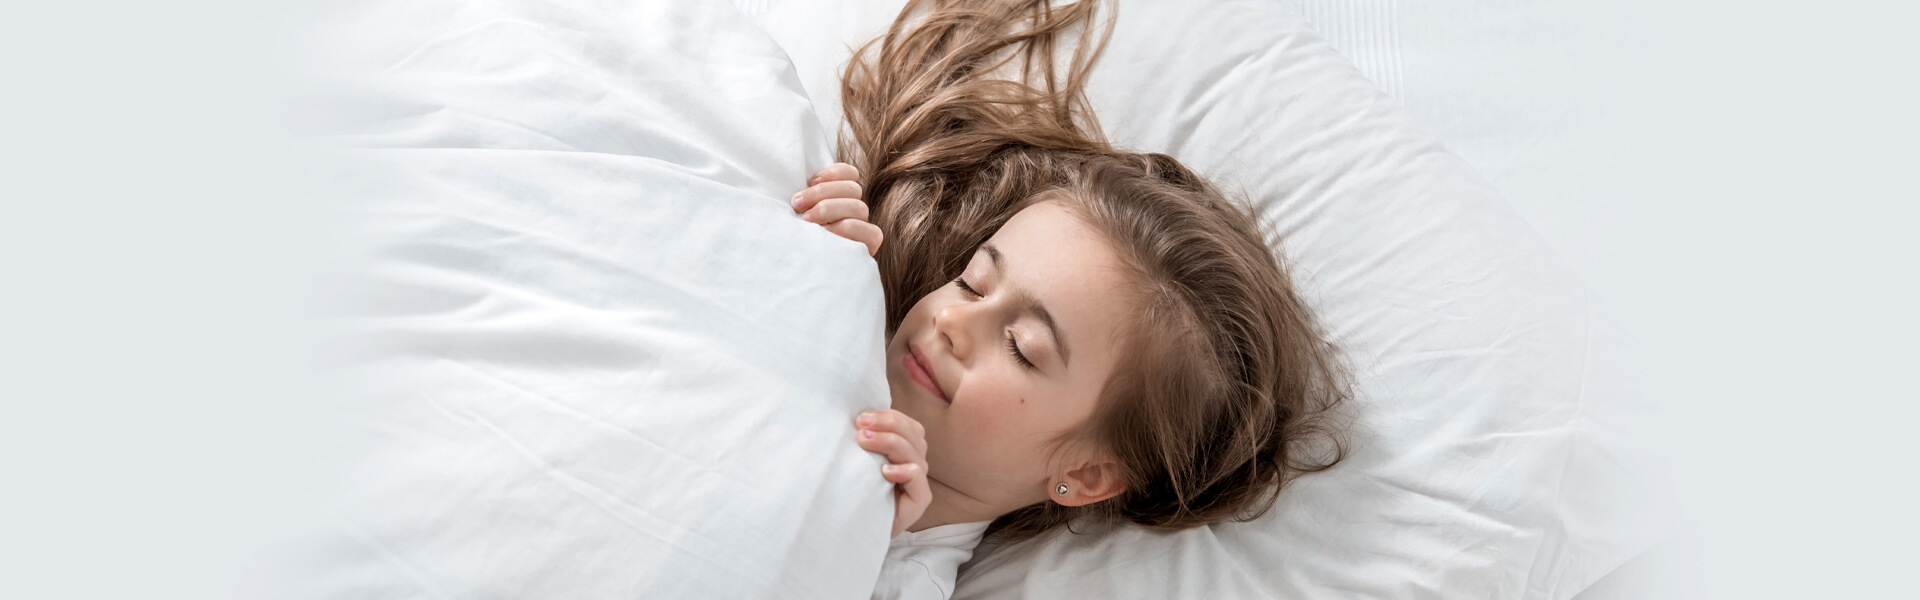 Child’s ADHD Could Actually Be Sleep Apnea